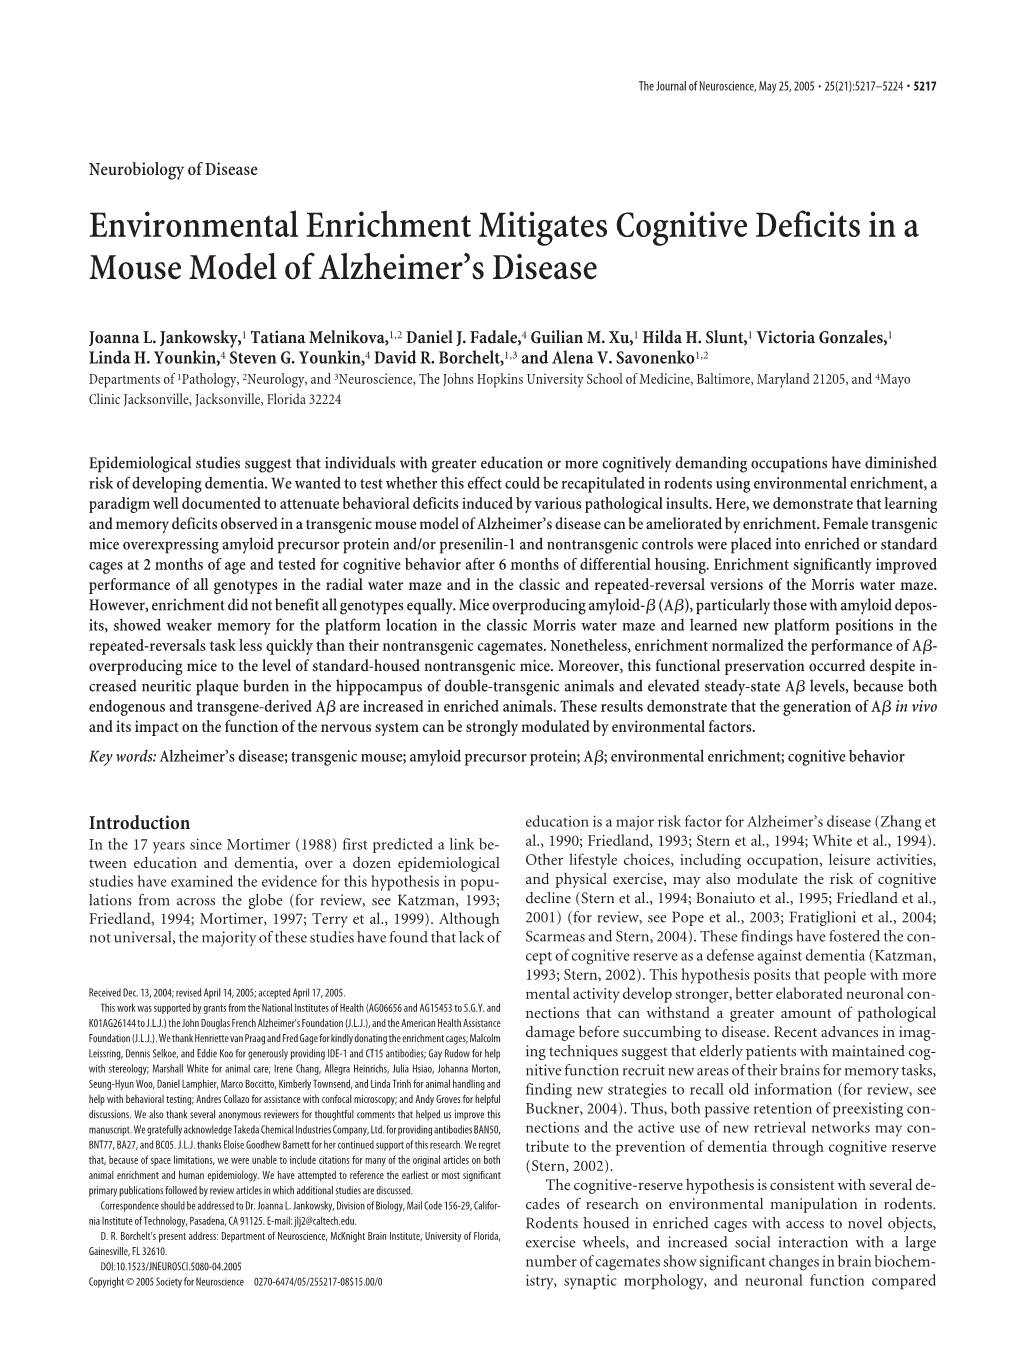 Environmental Enrichment Mitigates Cognitive Deficits in a Mouse Model of Alzheimer’S Disease